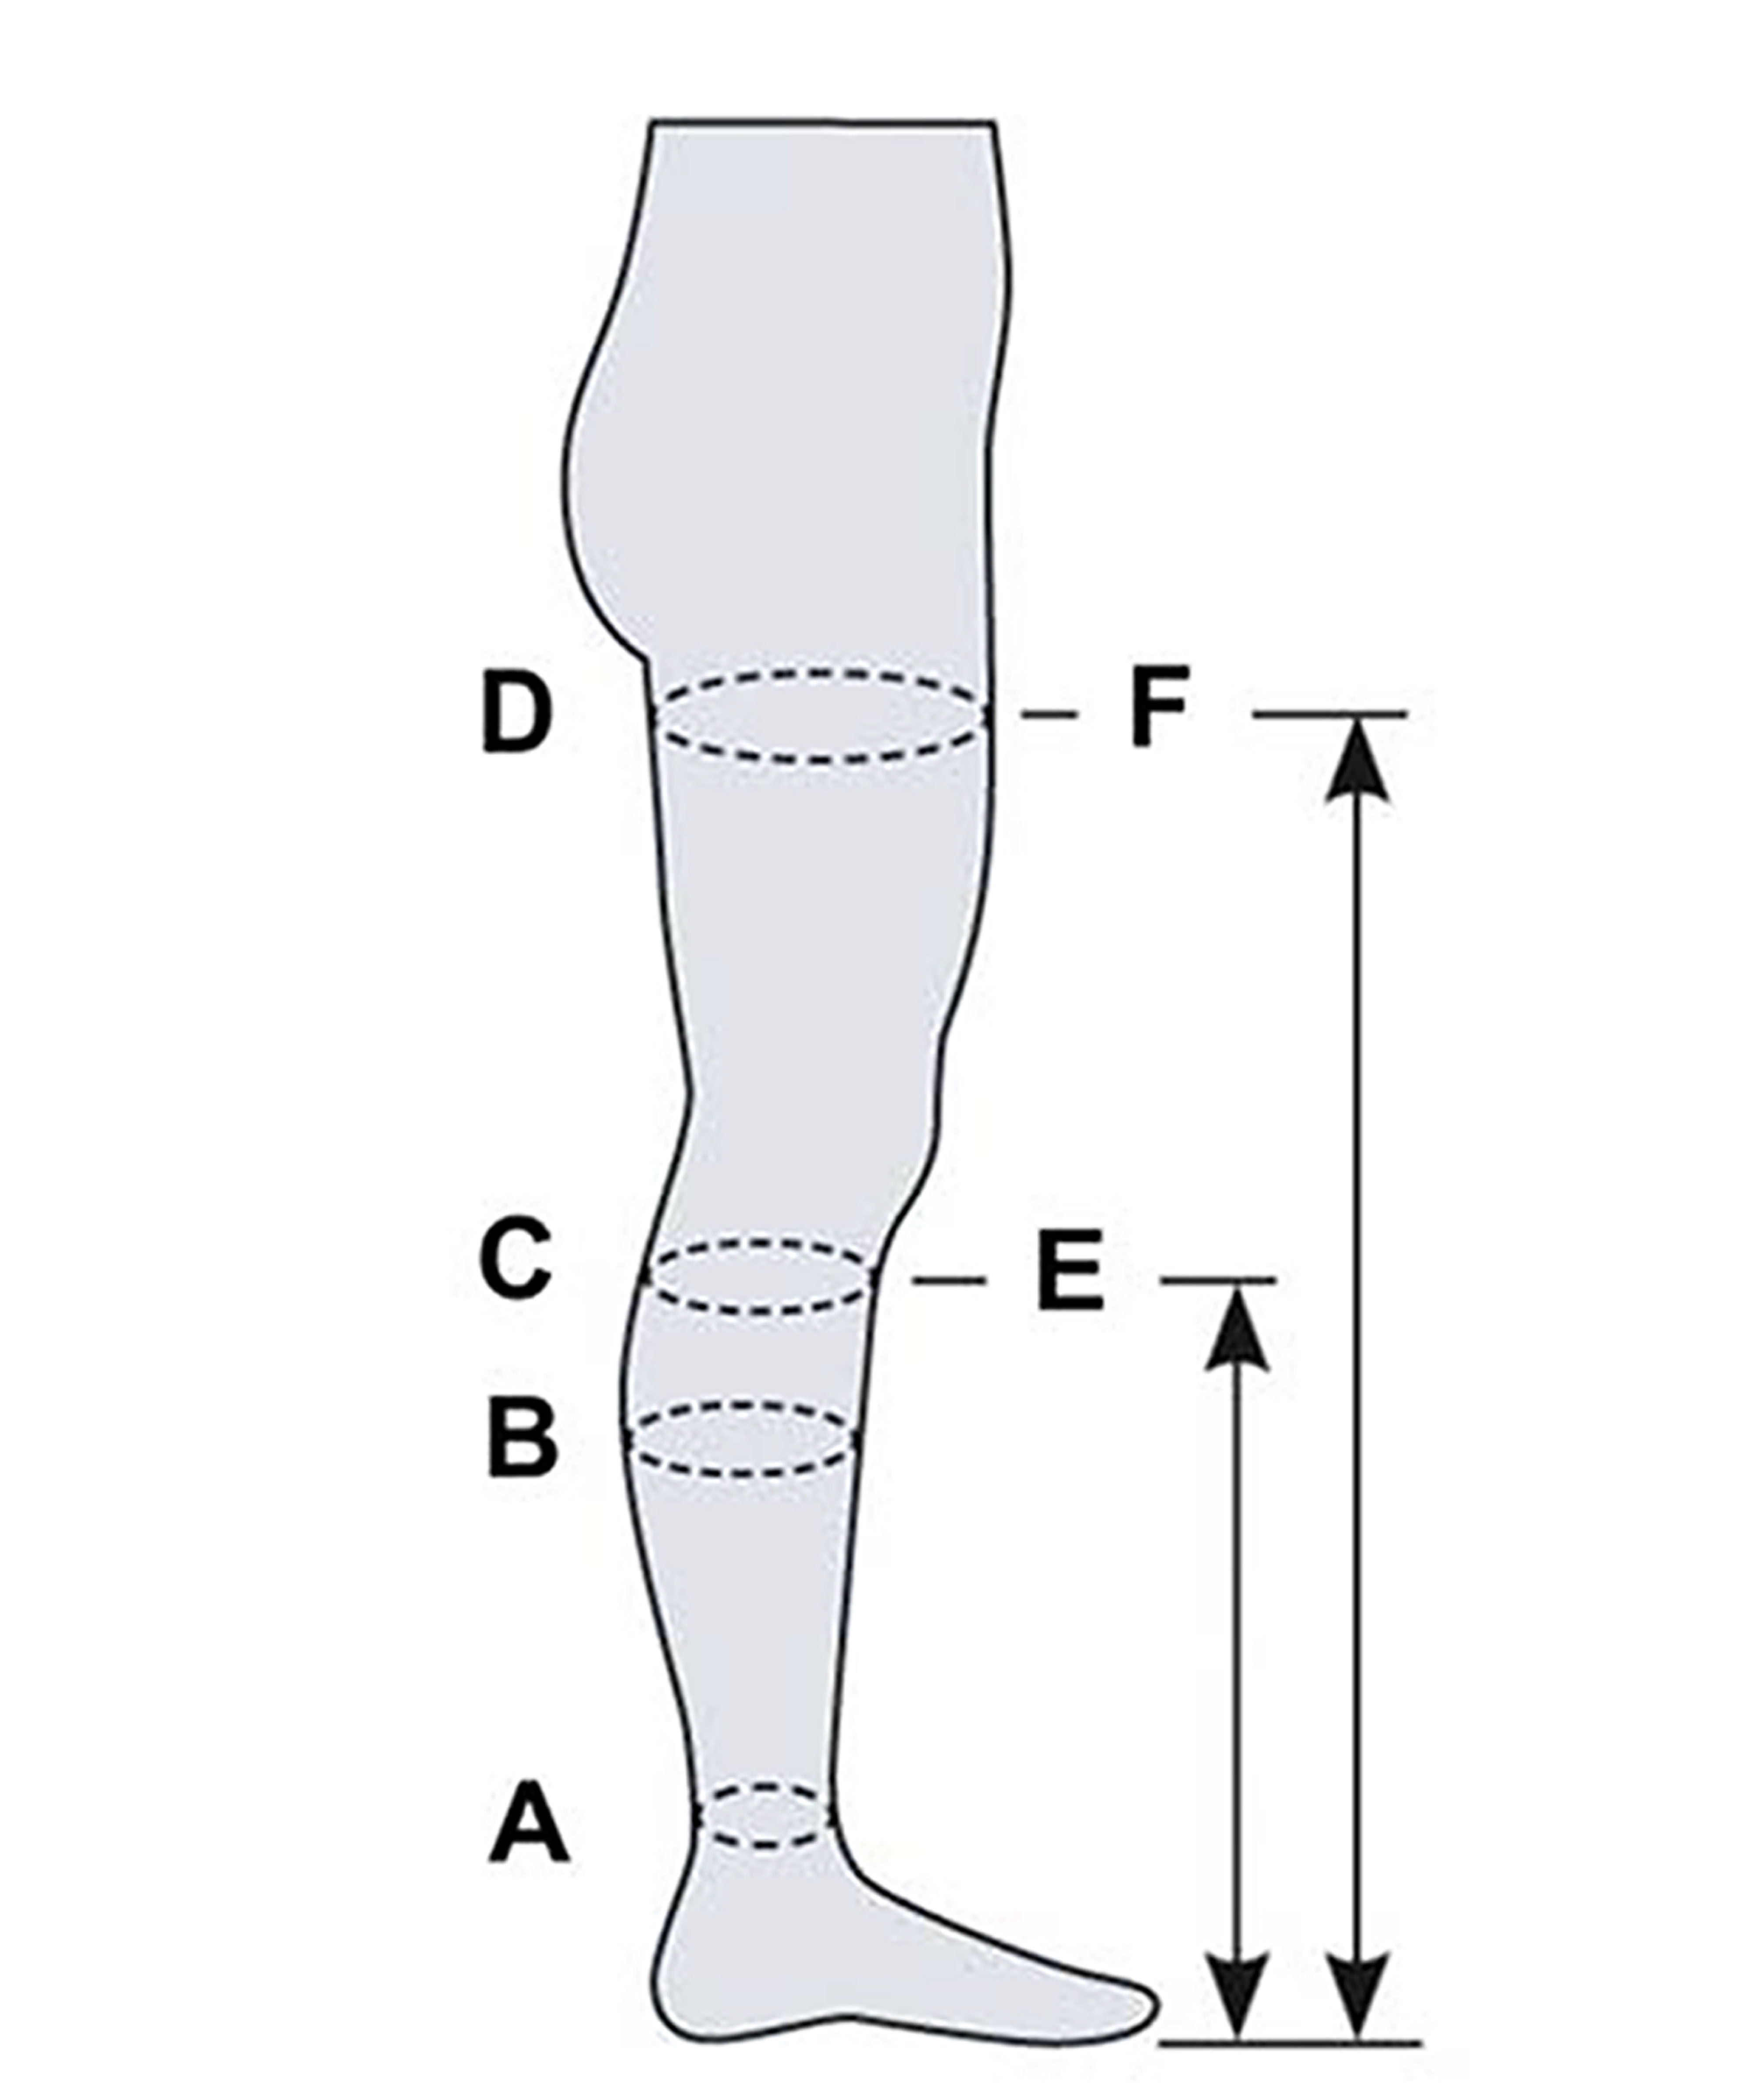 Sanyleg Θεραπευτική κάλτσα κάτω γόνατος με σιλικόνη (ανοικτά δάκτυλα) "Therapy Class II" T41 mm/hg 23-32 μπεζ